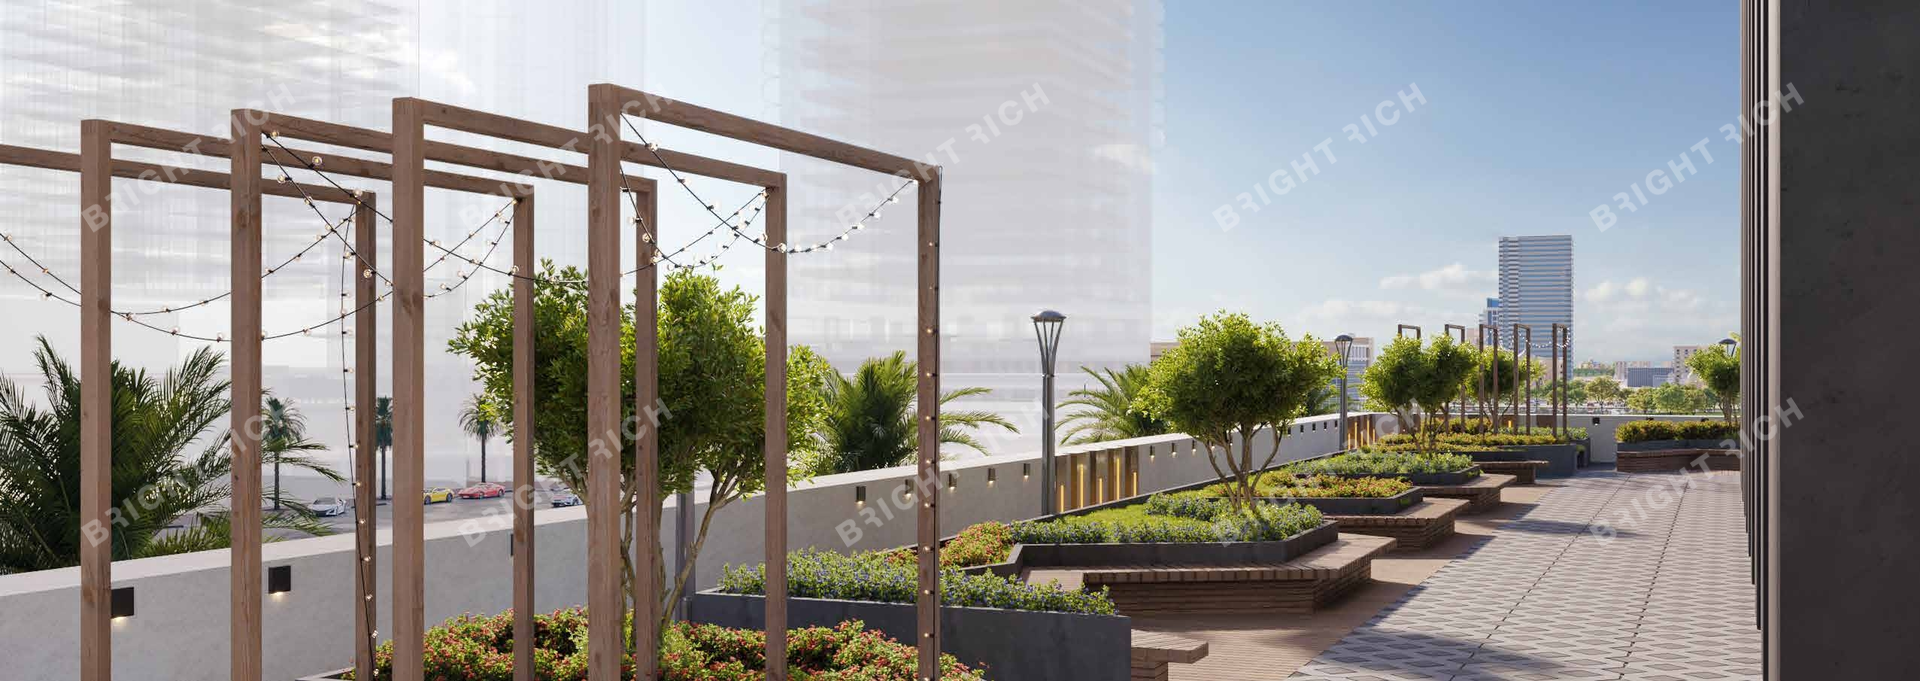 Aeternitas by Franck Muller, apart complex in Dubai - 10